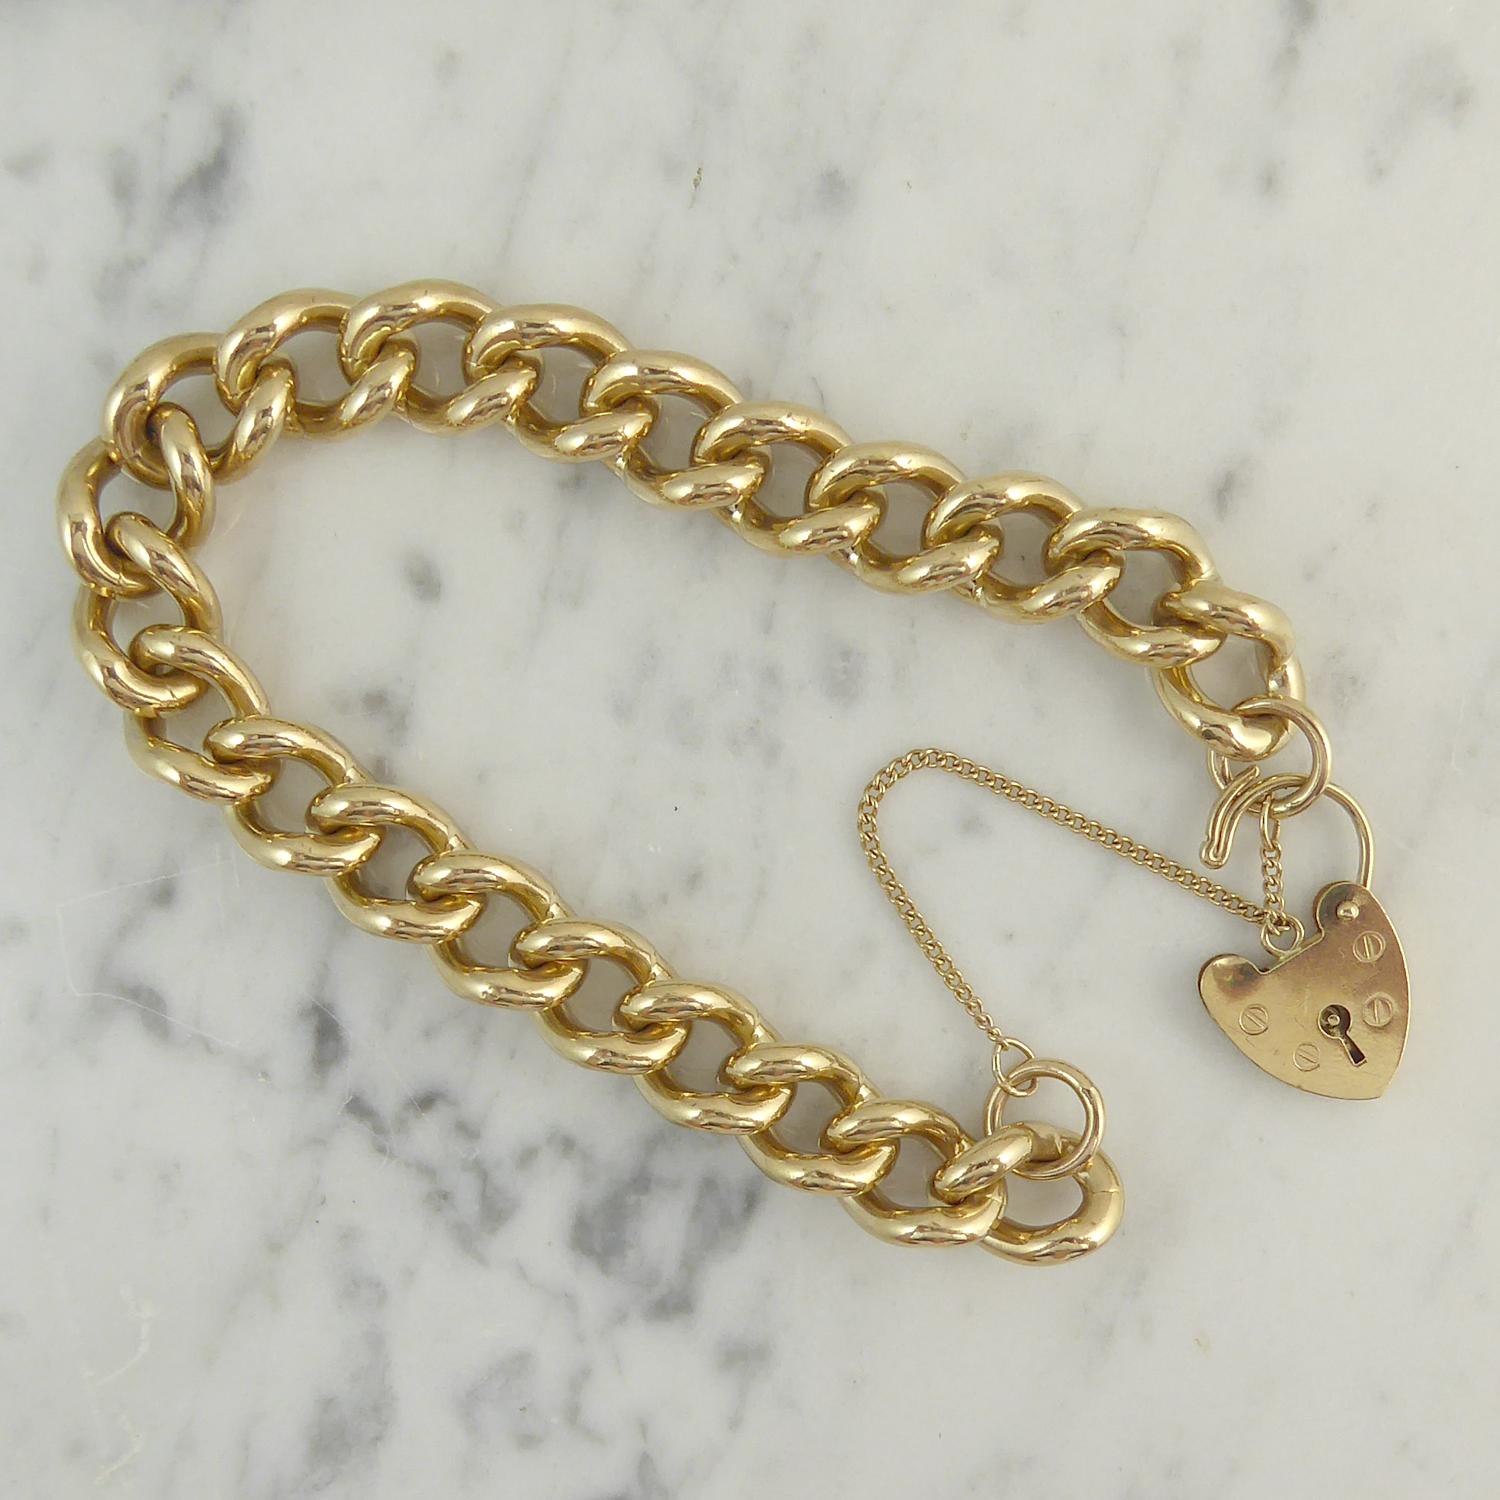 Woman's or Men's Vintage Gold Curb Link Bracelet, Padlock Closure, Yellow Gold 1